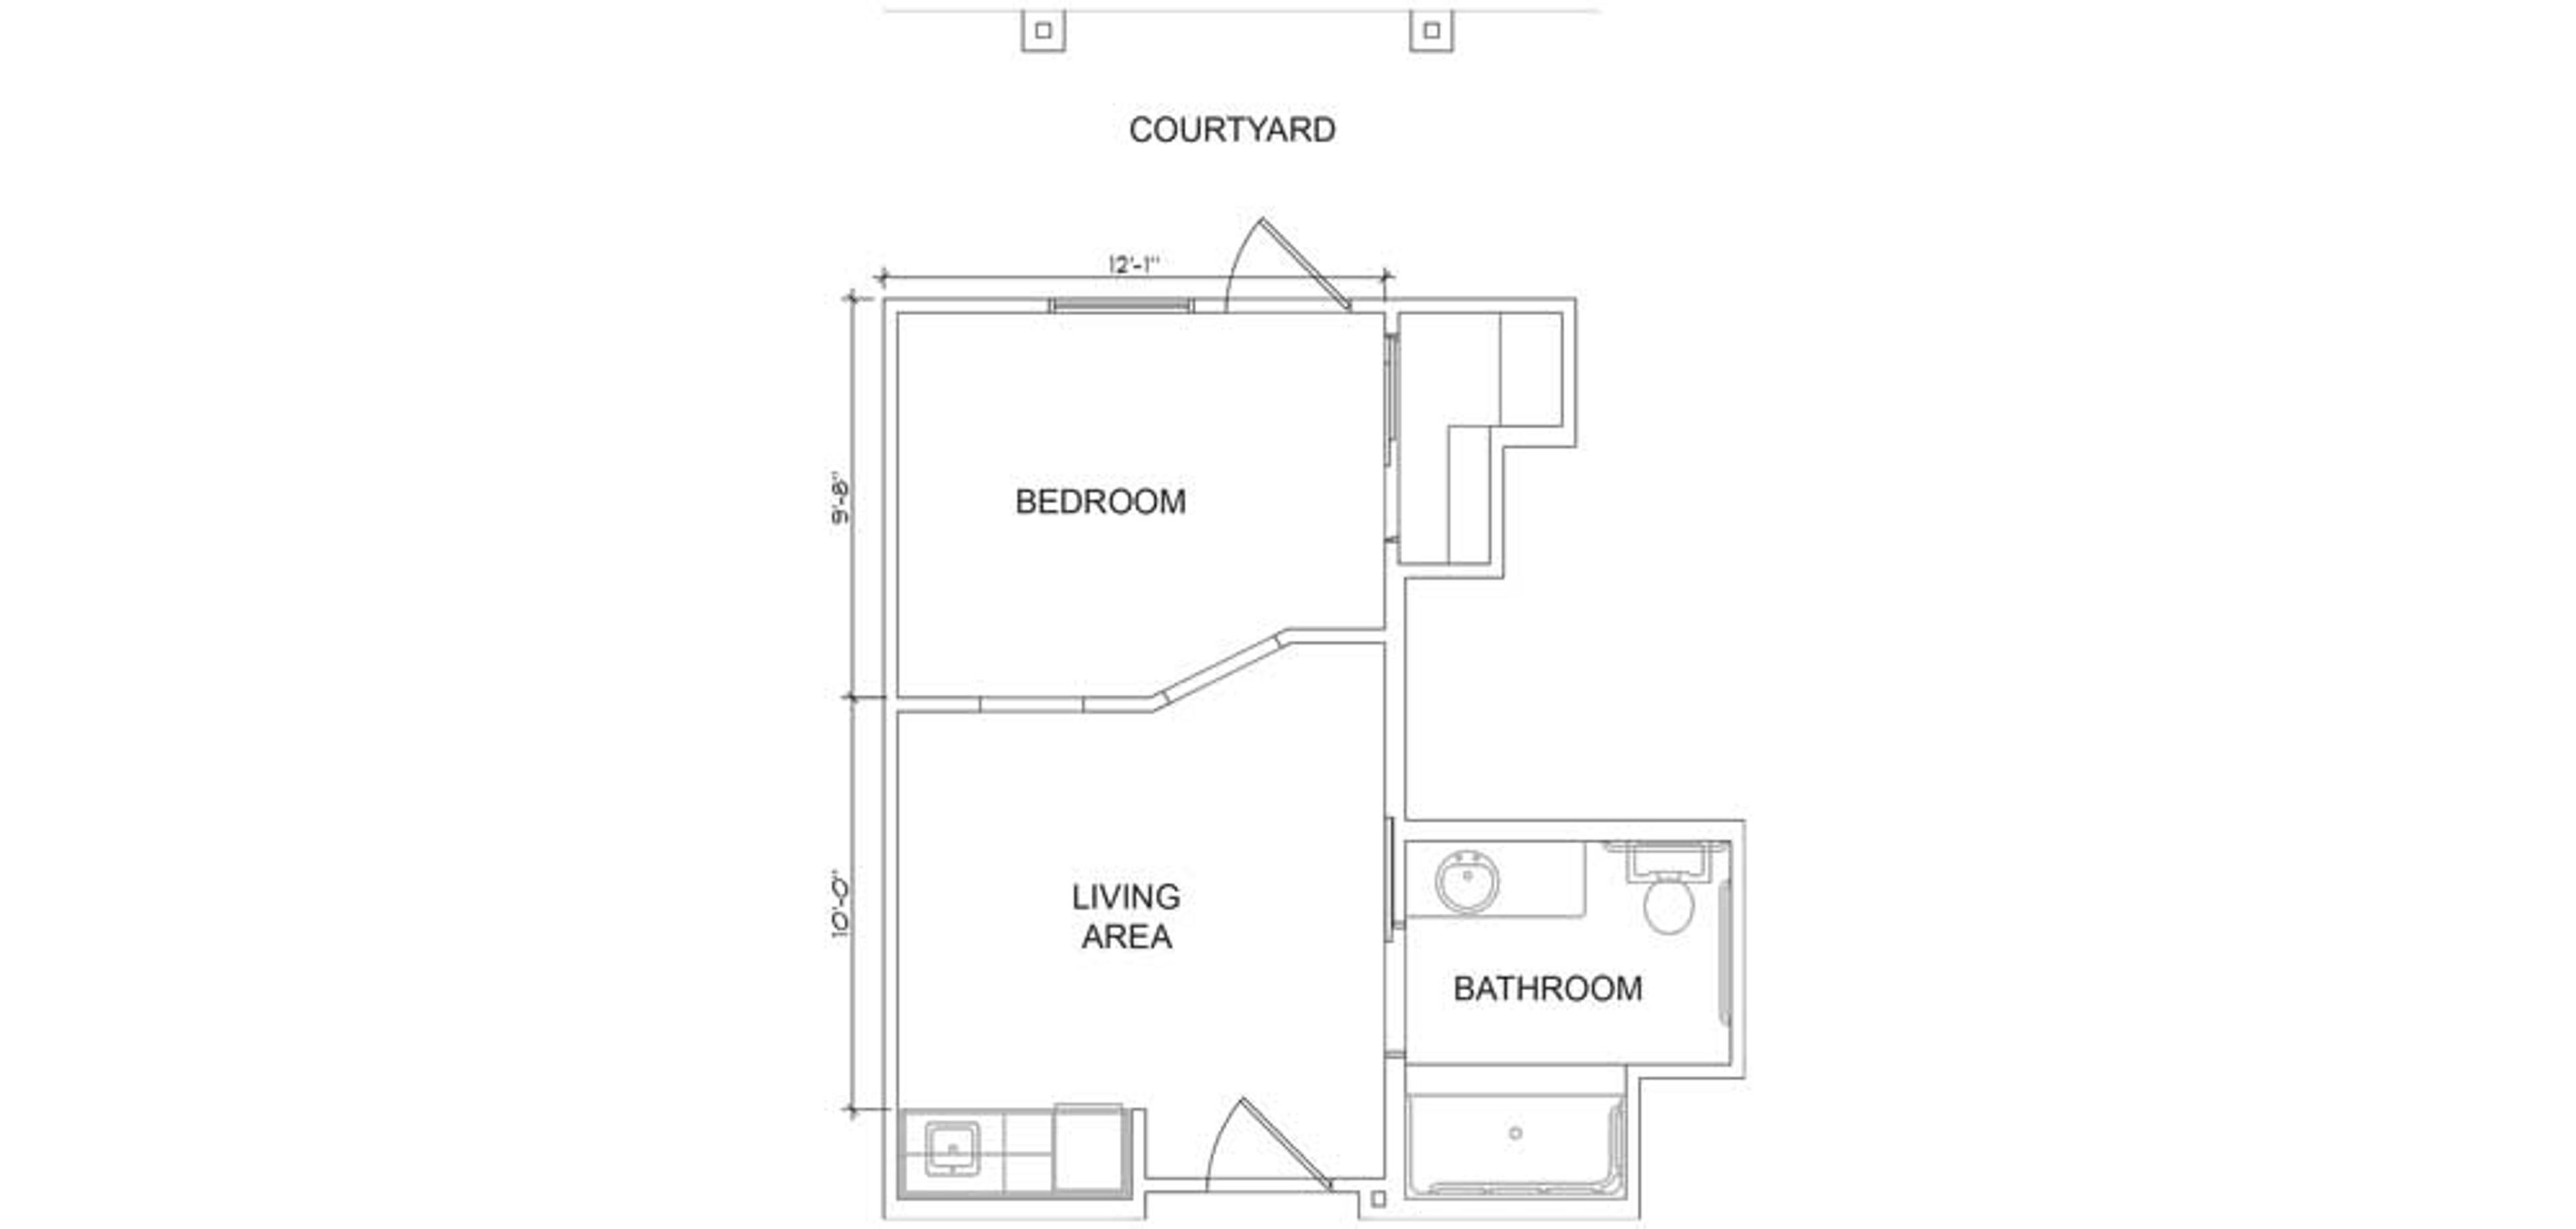 Floorplan - Heritage Oaks - 1B 1B Courtyard Assisted Living